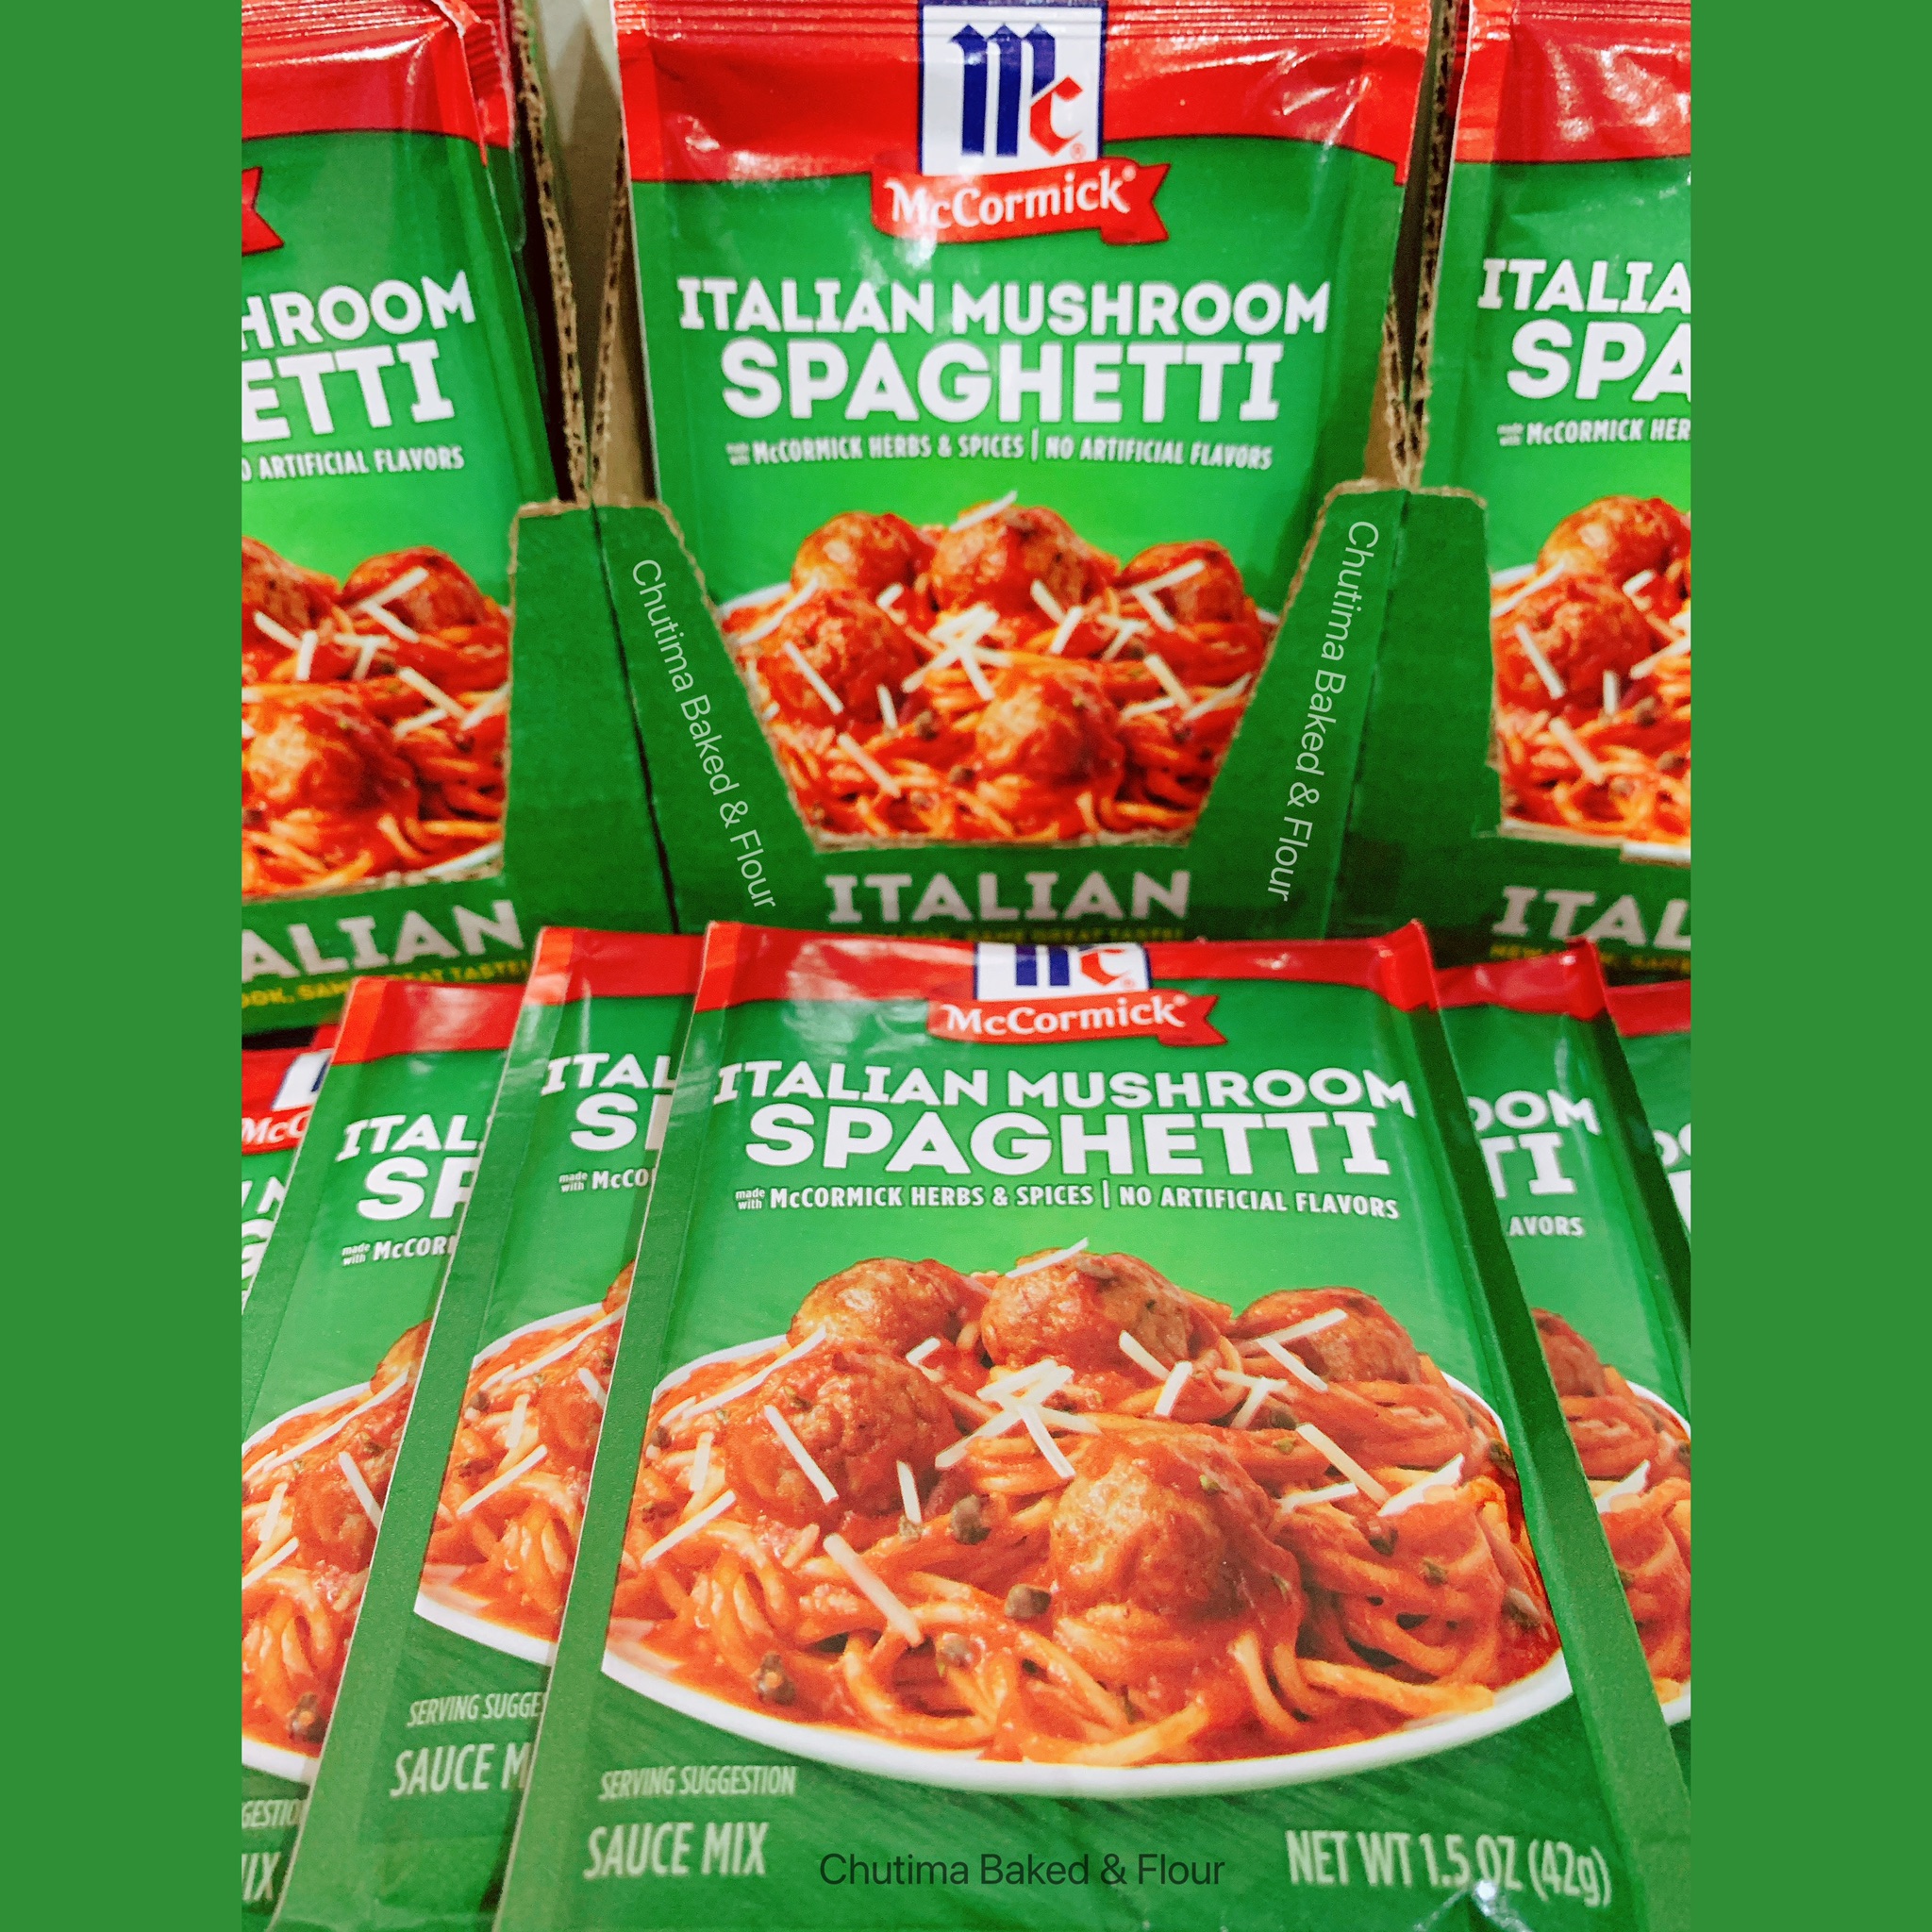 McCormick Italian Style Spaghetti Sauce Mix with Mushrooms 42g. แม็คคอร์มิค อิตาเลี่ยน มัชรูม สปาเก็ตตี้ ซอส มิกซ์ 42กรัม.